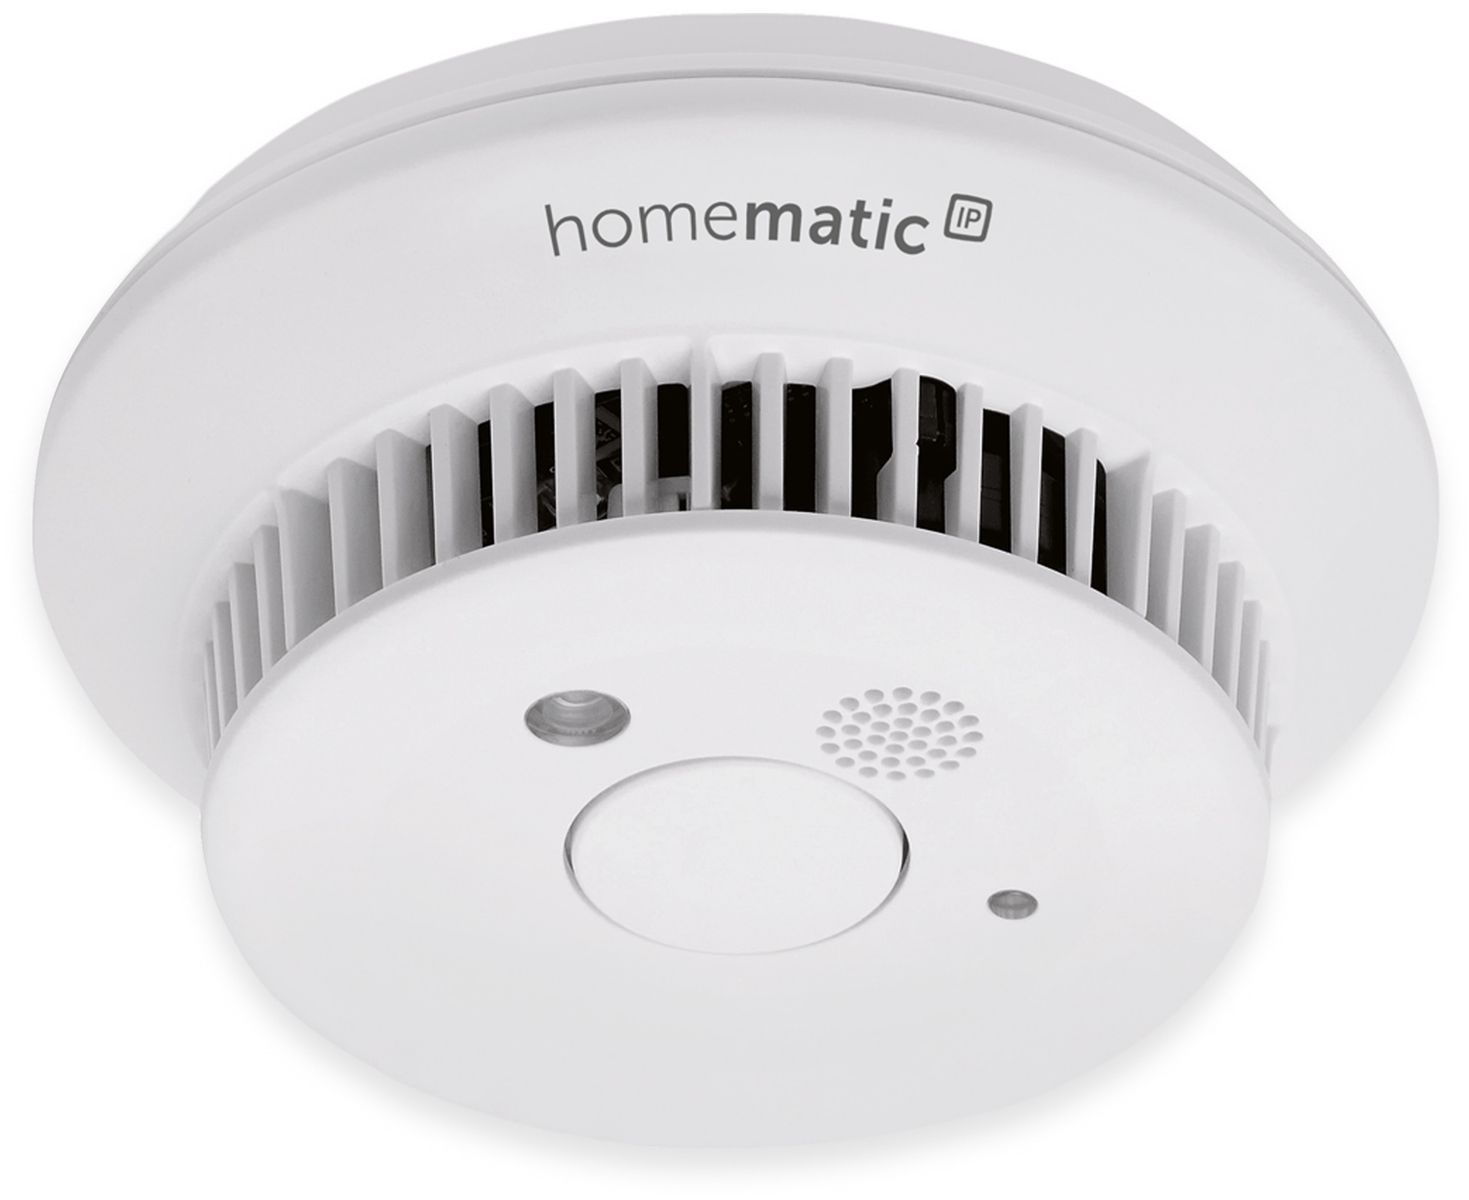 HOMEMATIC IP Smart Home 142685A0, Rauchwarnmelder von Homematic IP